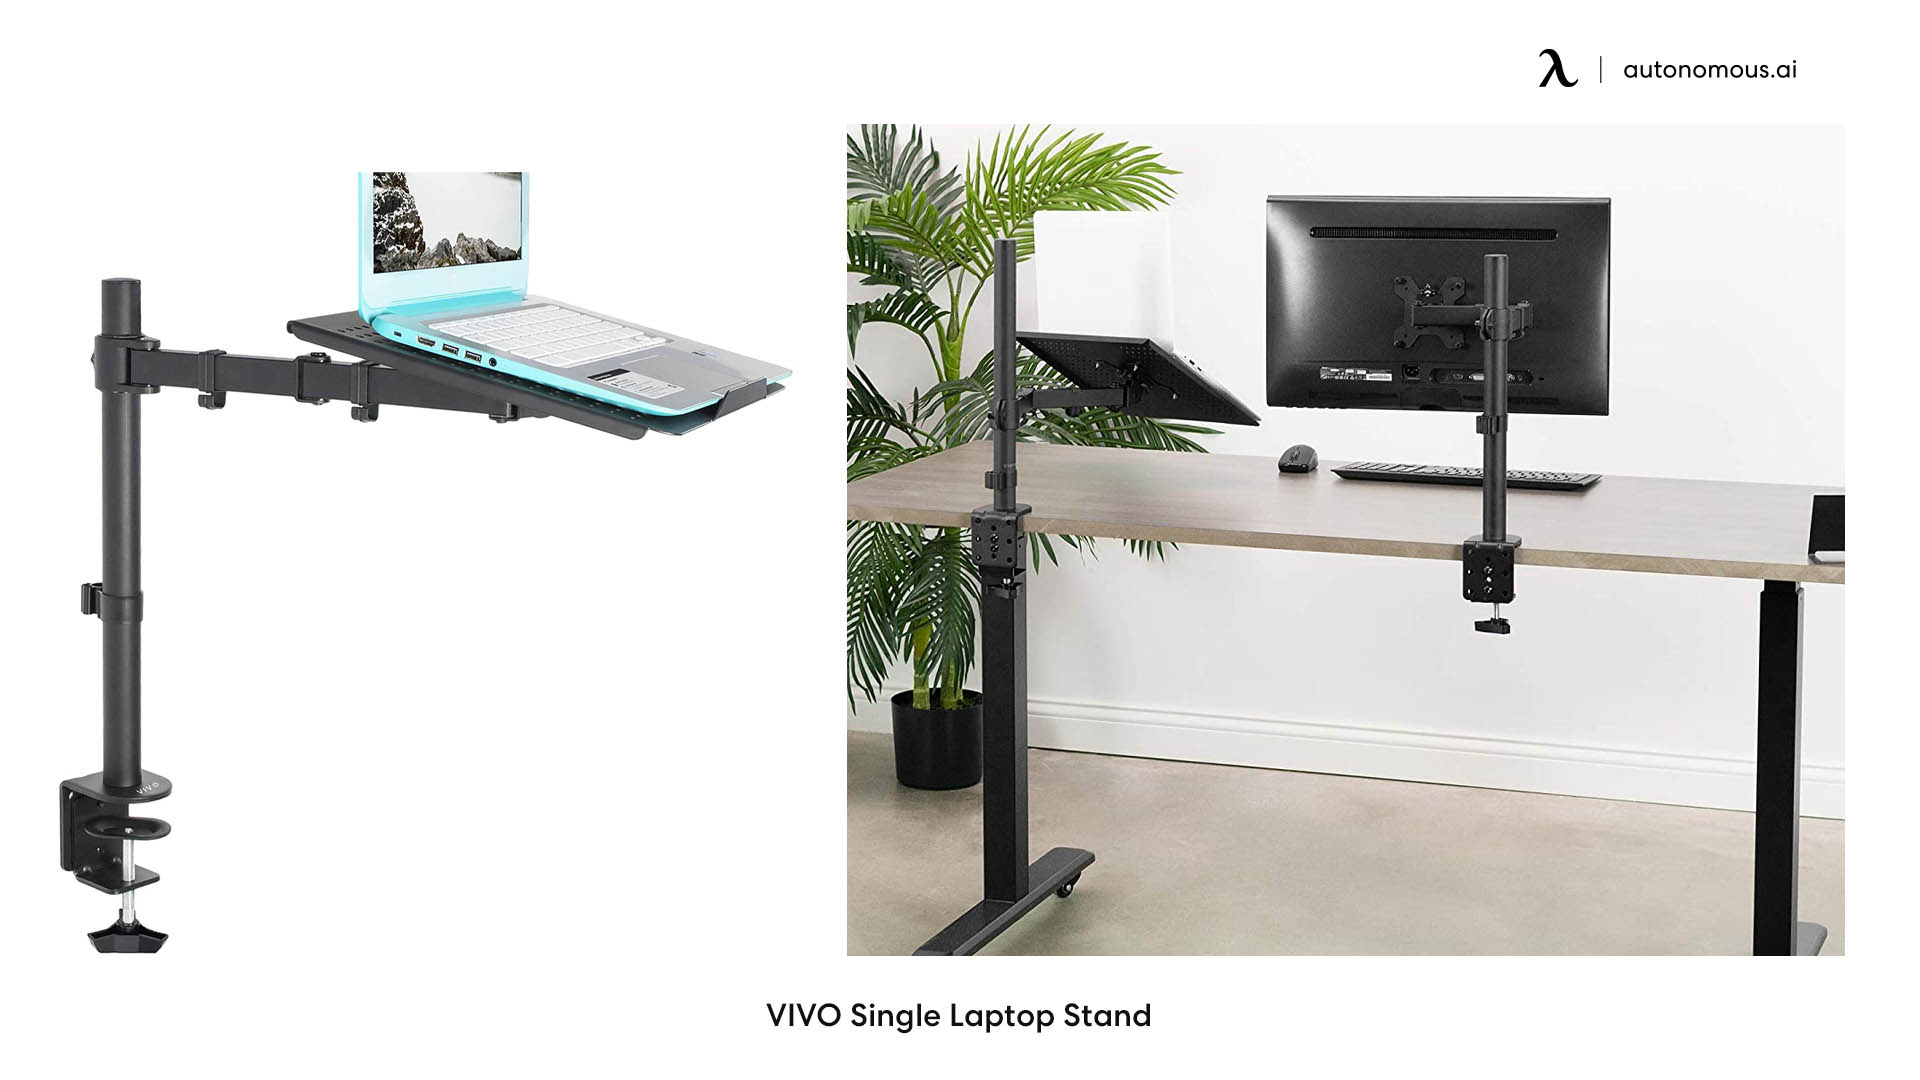 VIVO Single Laptop Stand